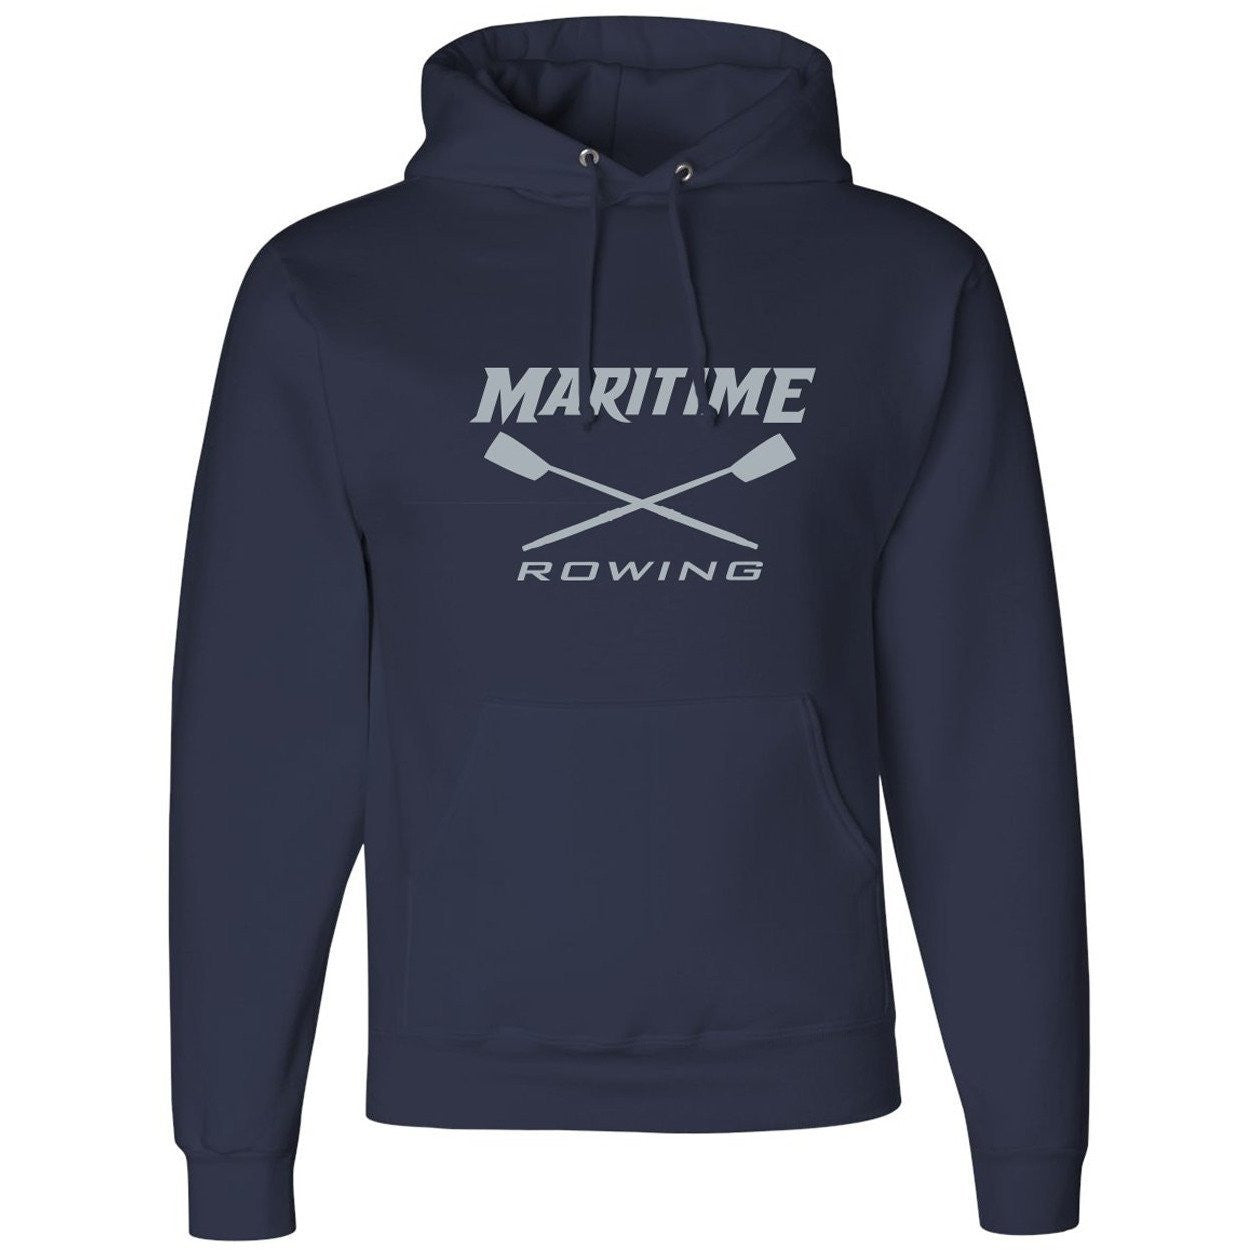 50/50 Hooded Maritime Rowing Pullover Sweatshirt